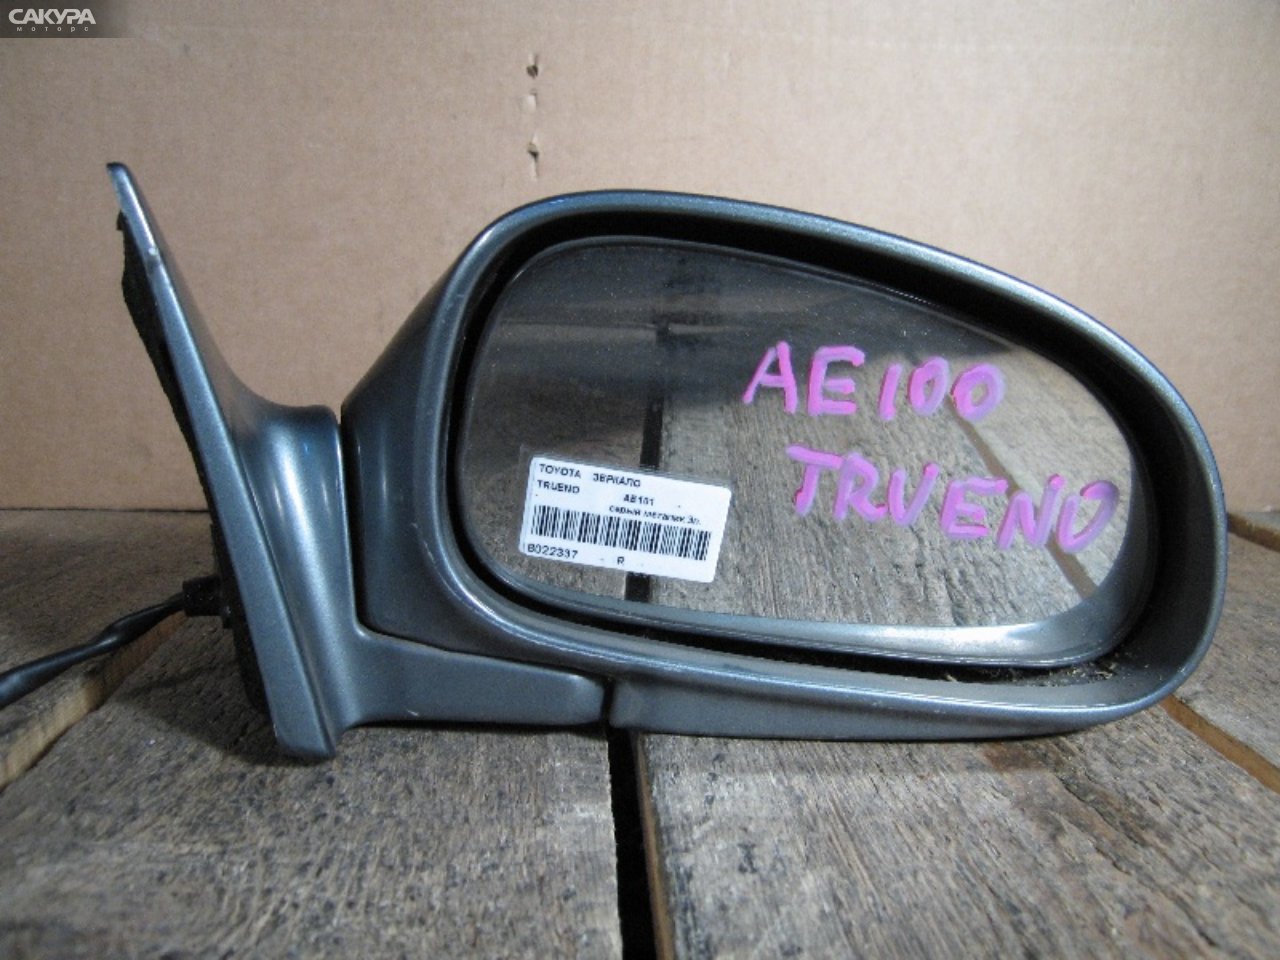 Зеркало боковое правое Toyota Sprinter Trueno AE101: купить в Сакура Абакан.